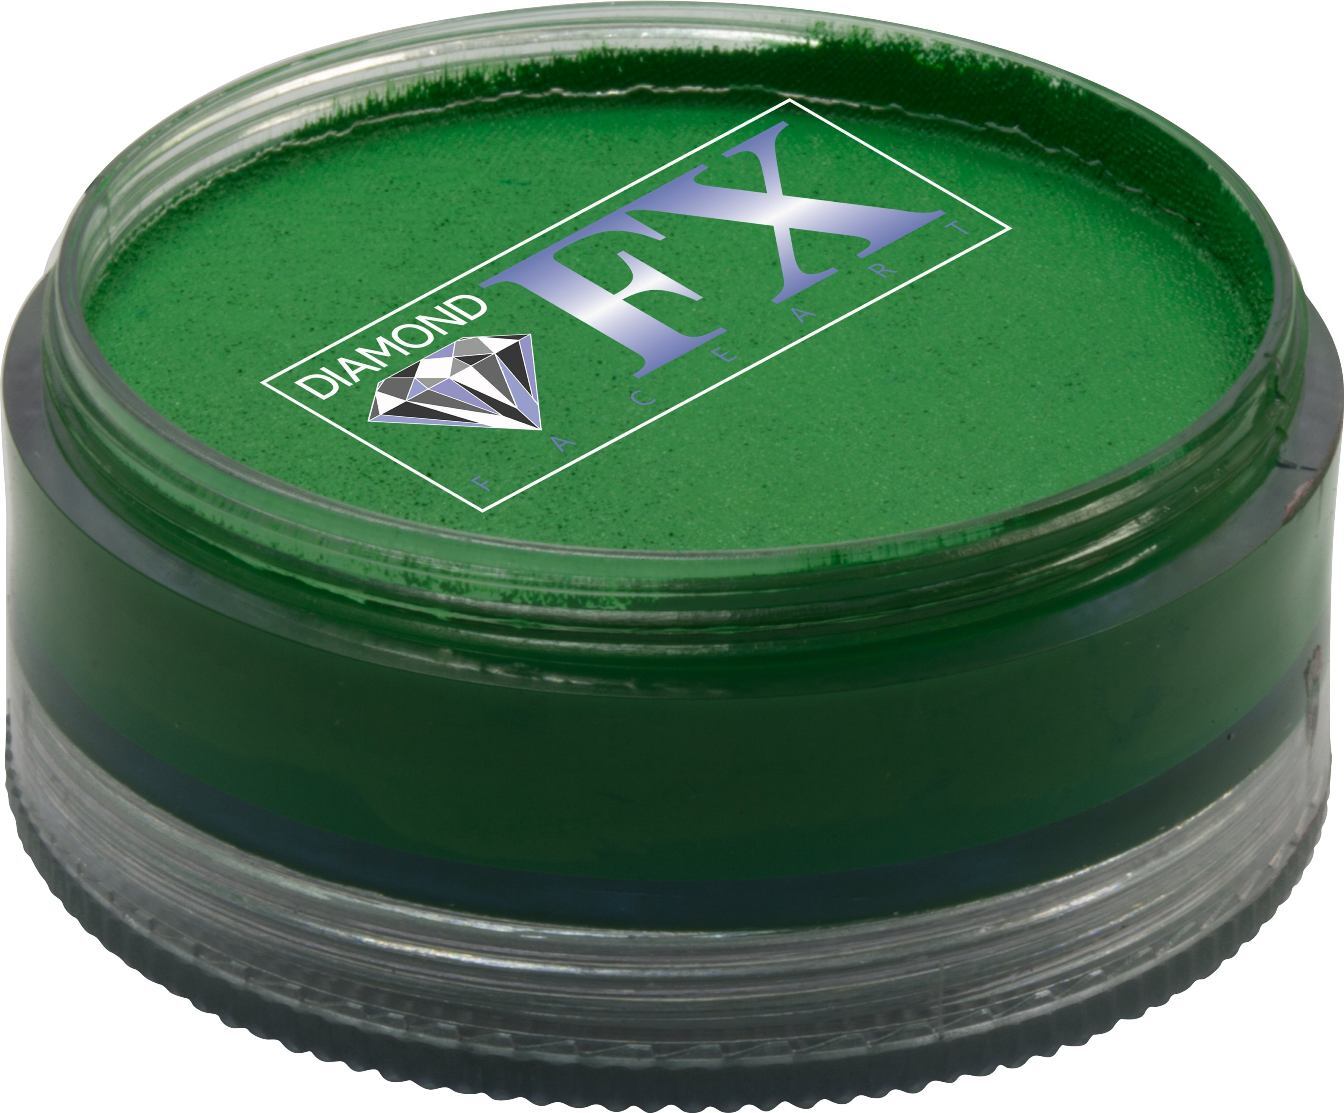 Diamond FX Green 90g - Small Image